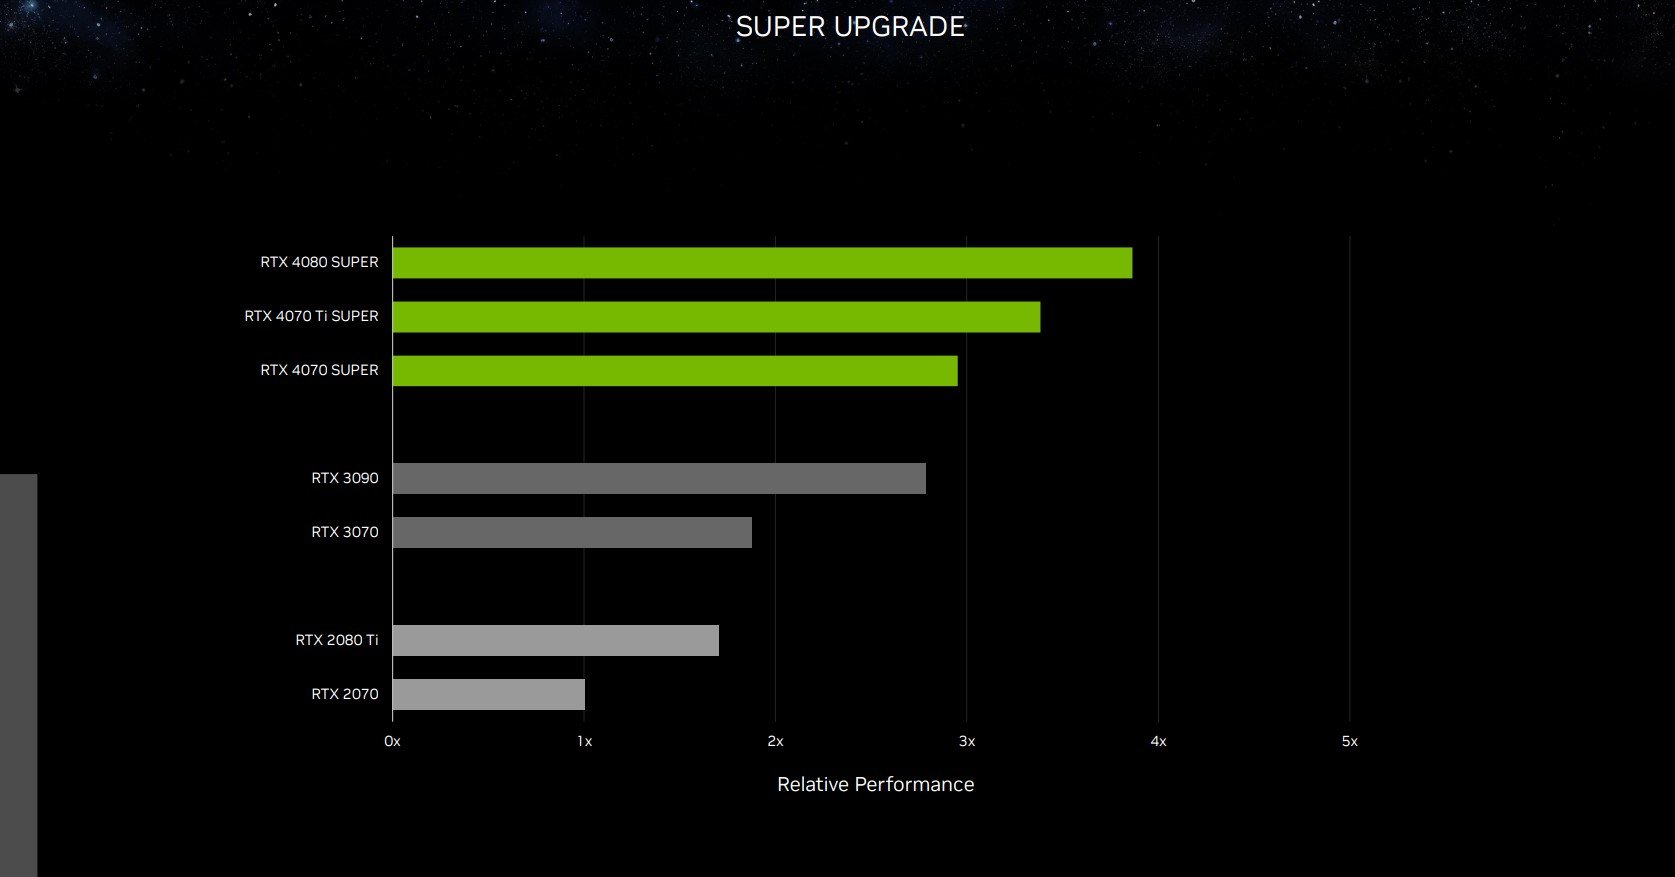 A slide comparing GeForce RTX Super performance against older-generation GPUs.